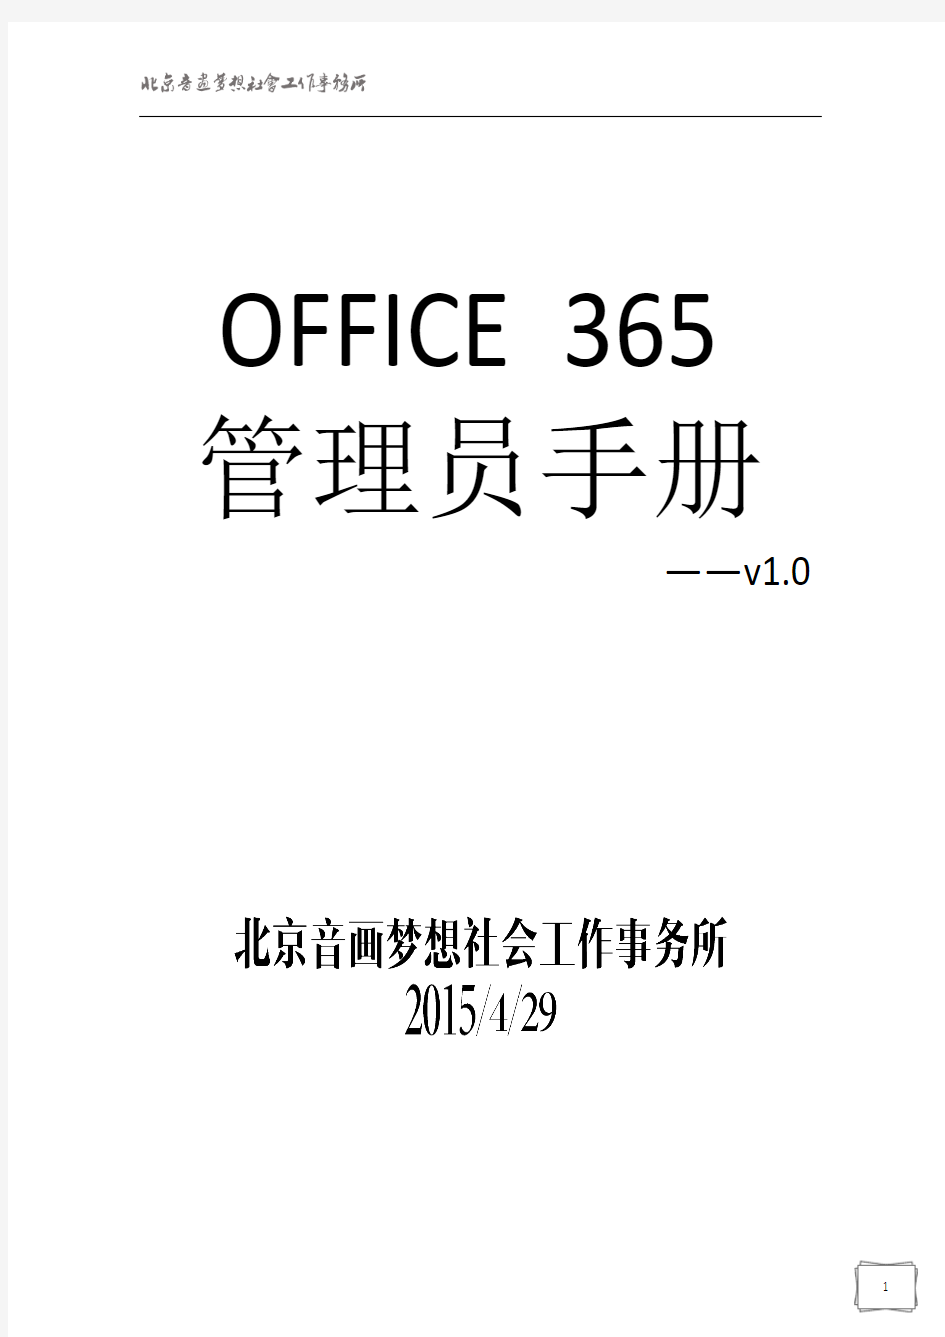 OFFICE_365 管理员手册_v1.0